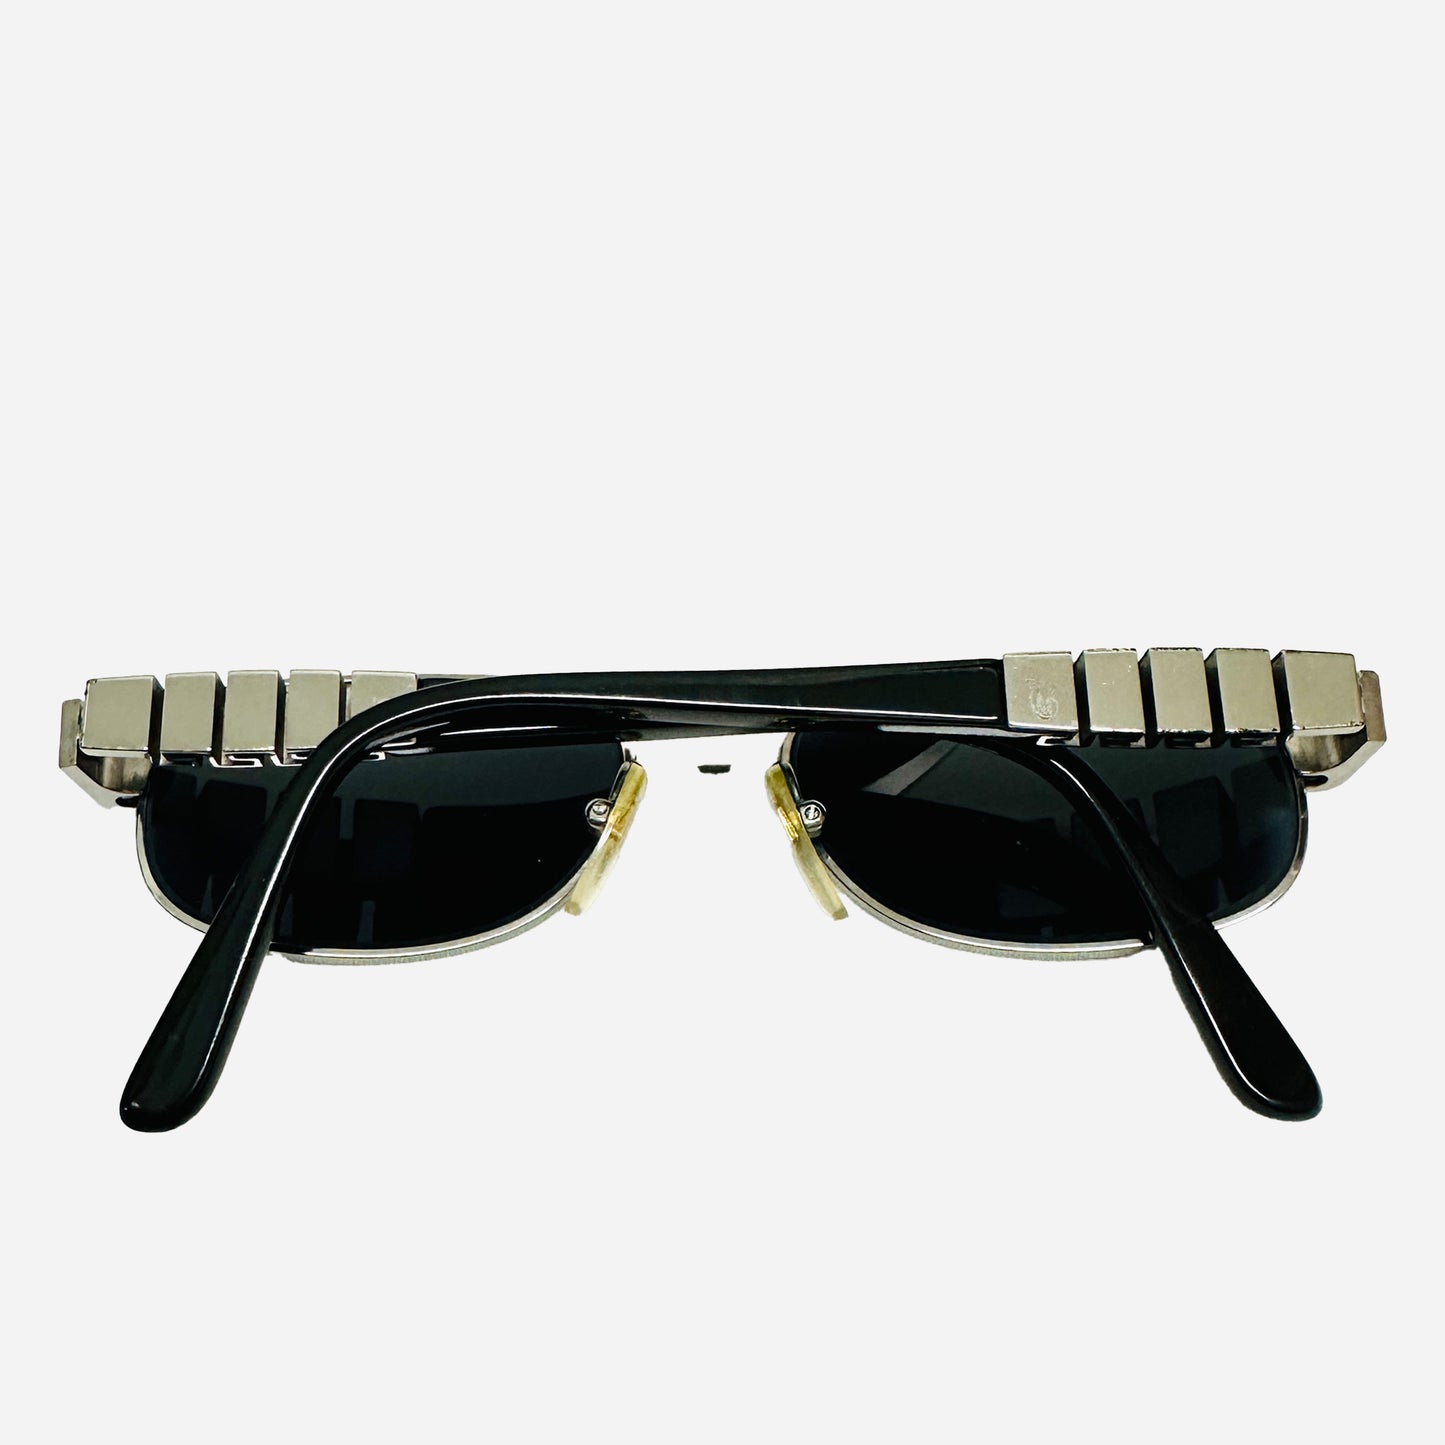 Vintage-Gianni-Versace-Sonnebrille-Sunglasses-S20-s-20-designer-the-seekers-sunglasses-back